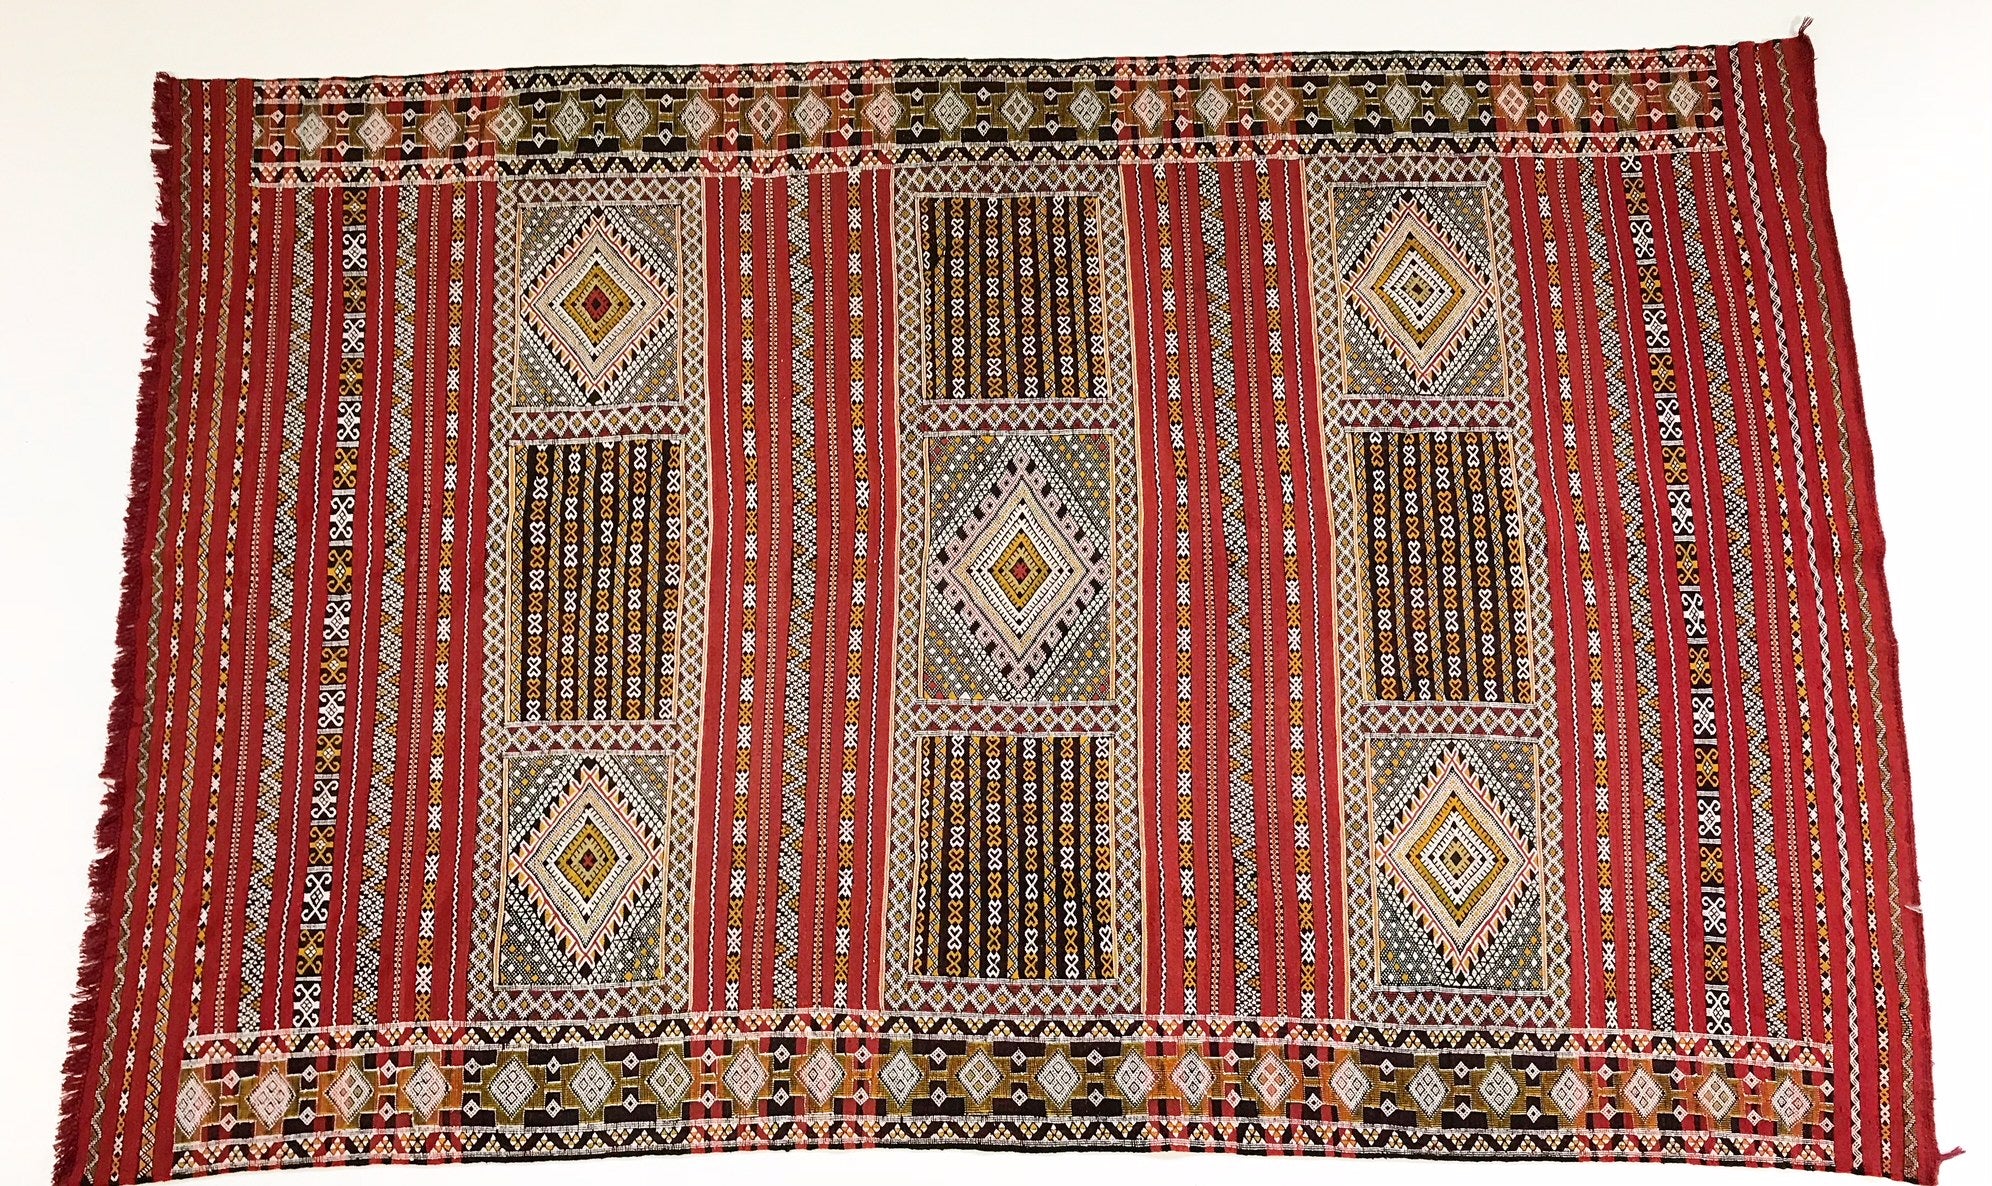 Handmade Kilim Rug from Morocco - 11.5 x 7.5 FT - FORSYTH